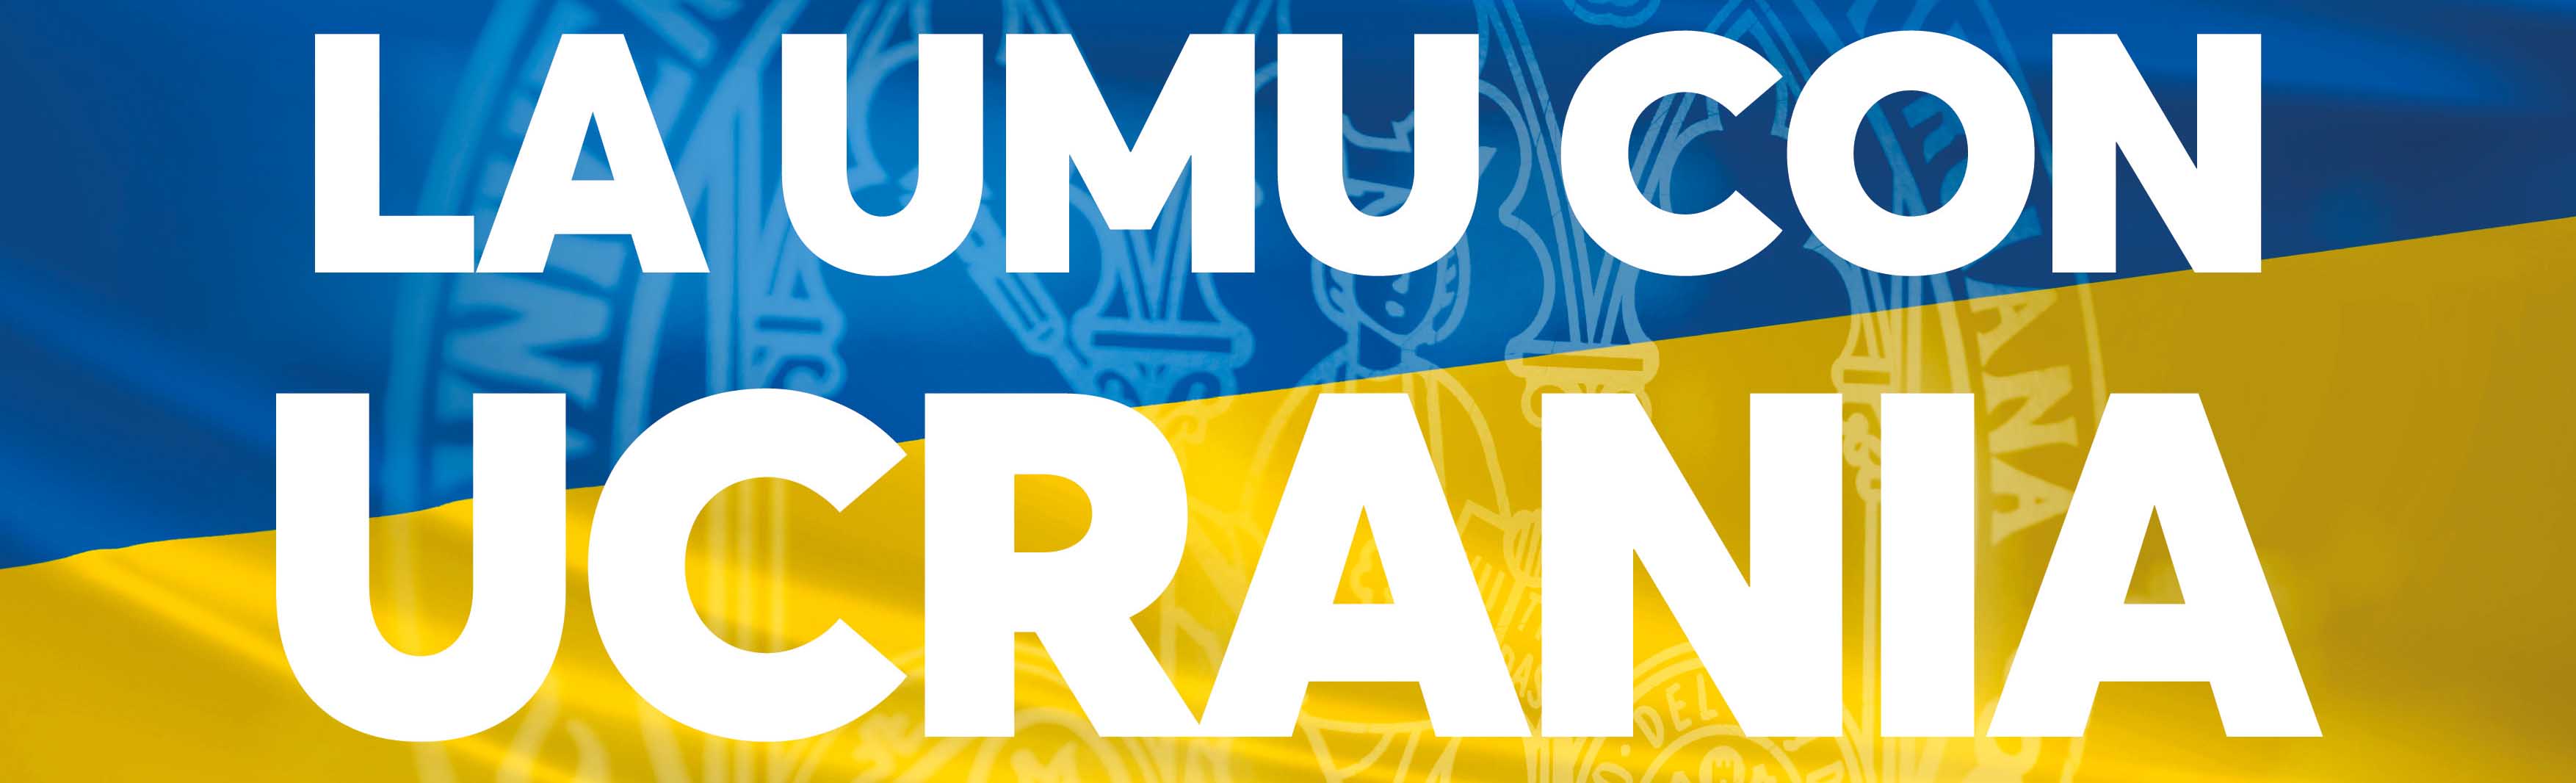 ➡️ GET TO KNOW THE UMU PROGRAM FOR UKRAINIAN REFUGEE STUDENTS